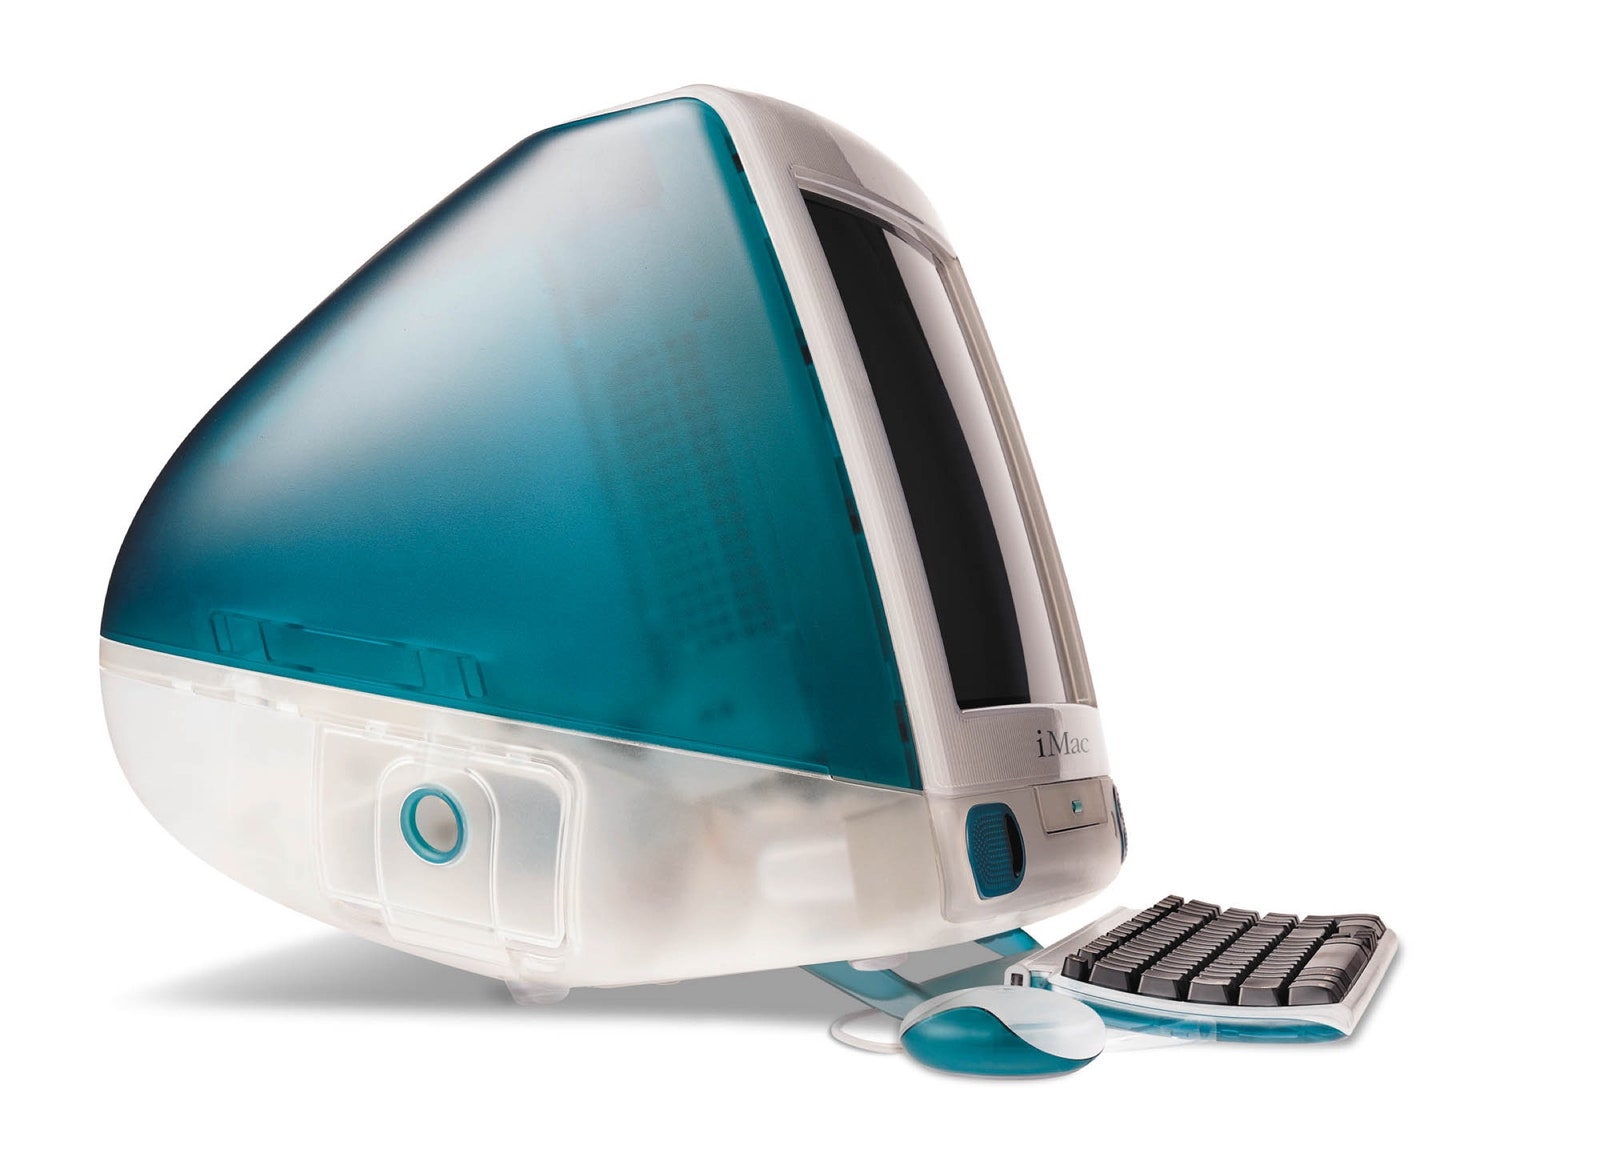 Imagen del iMac original Bondi Blue.